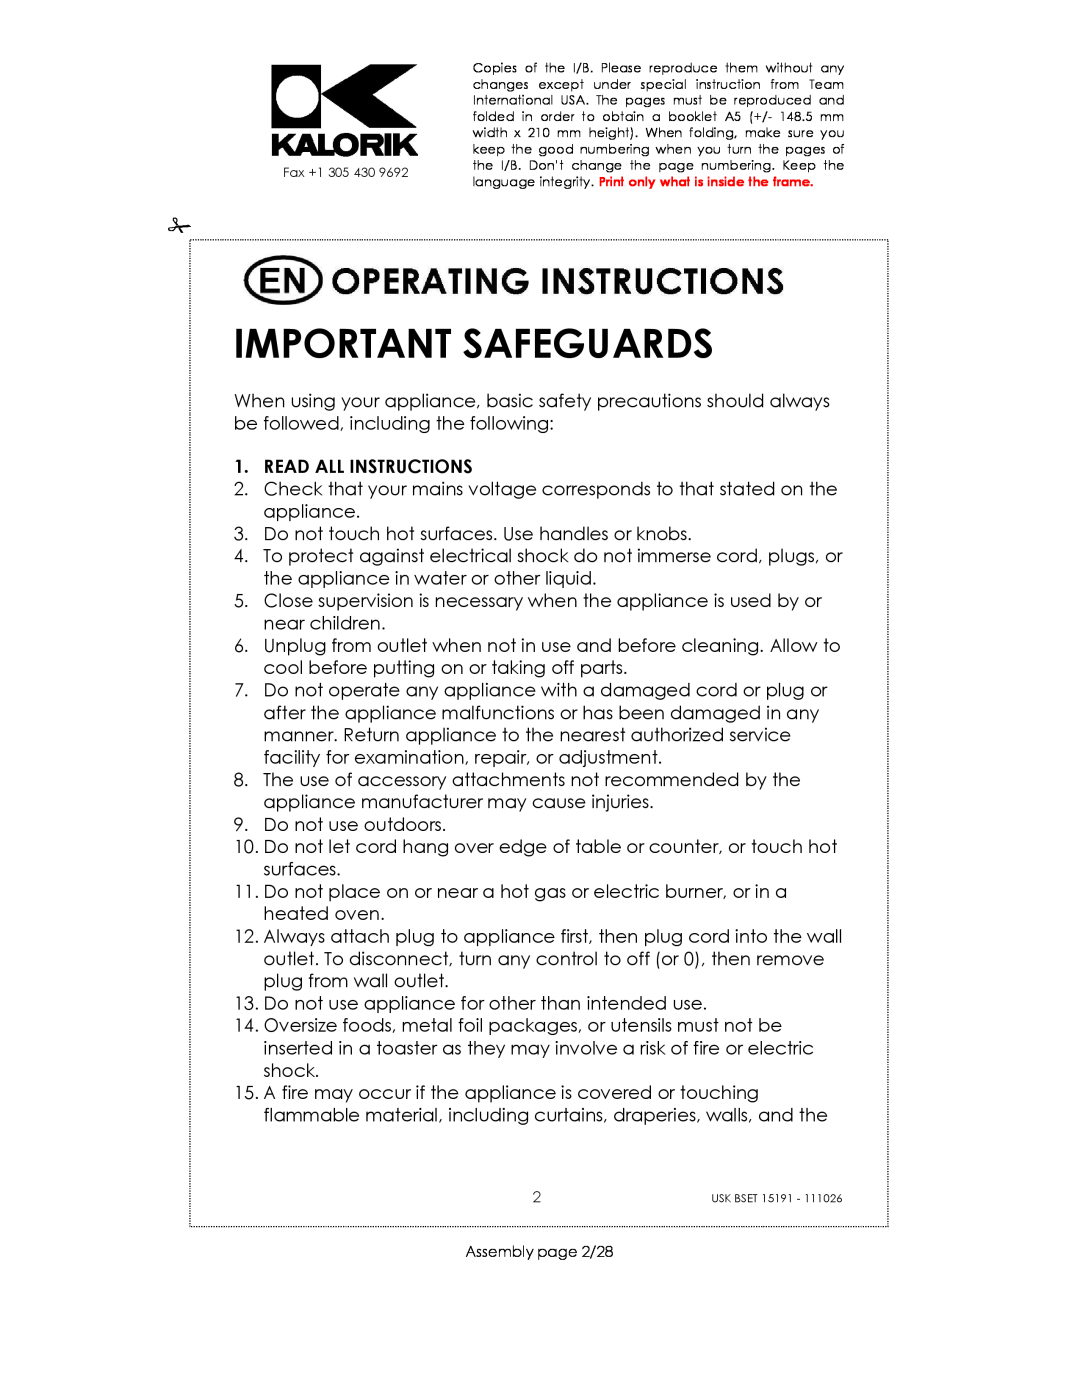 Kalorik USK BSET 15191 manual Important Safeguards, Read All Instructions 